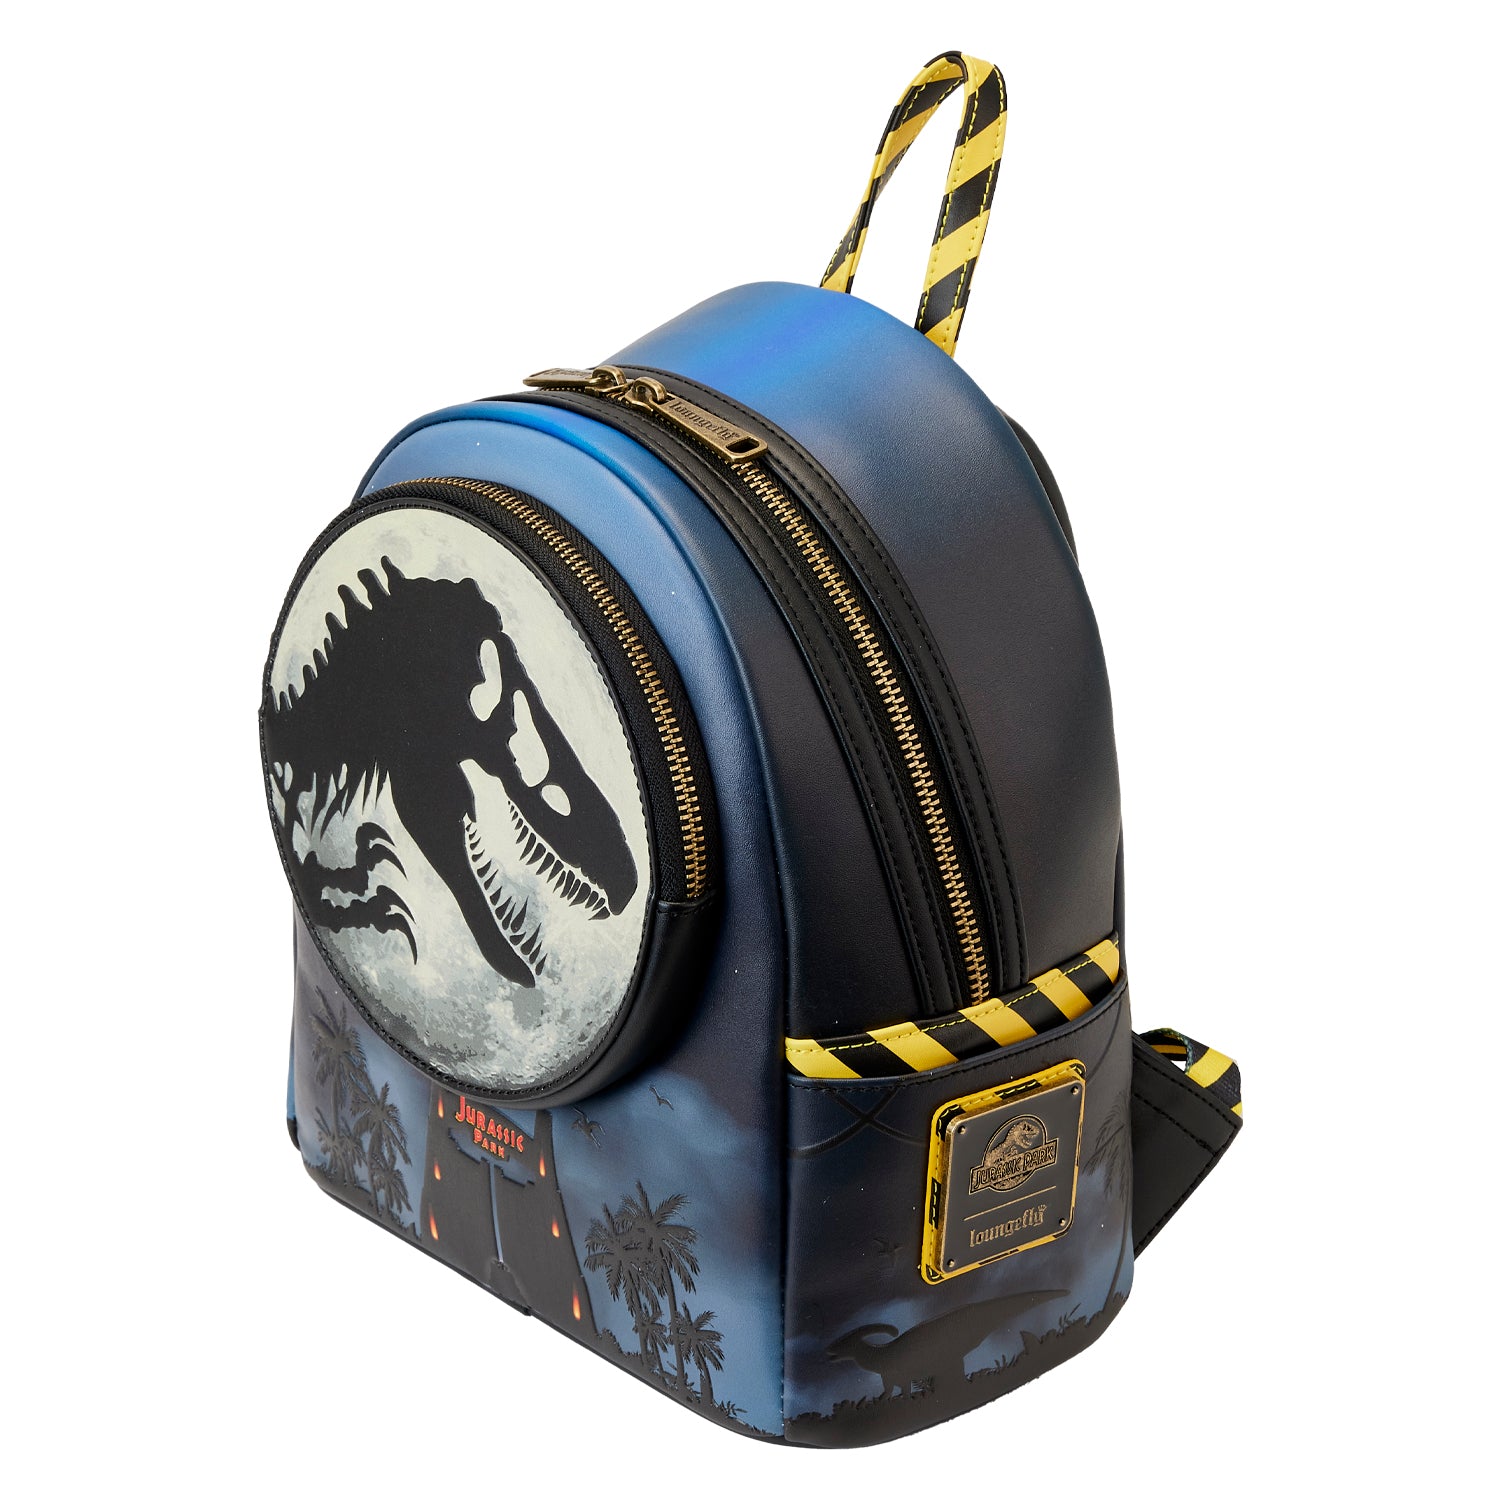 Jurassic Park | 30th Anniversary Dino Moon Mini Backpack